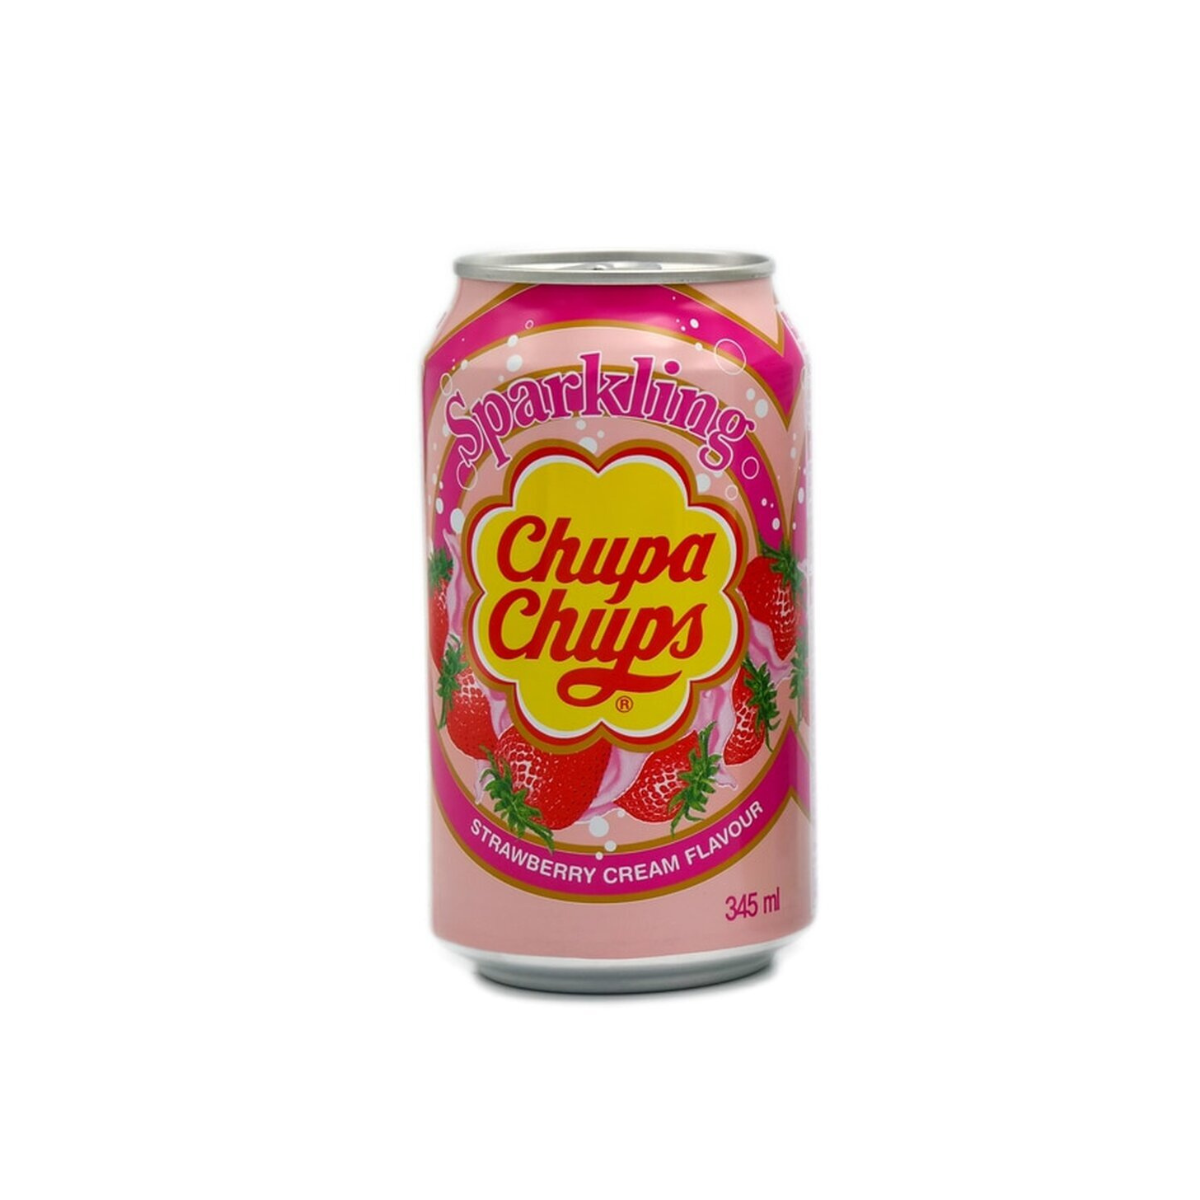 Chupa Chups Sparkling strawberry cream